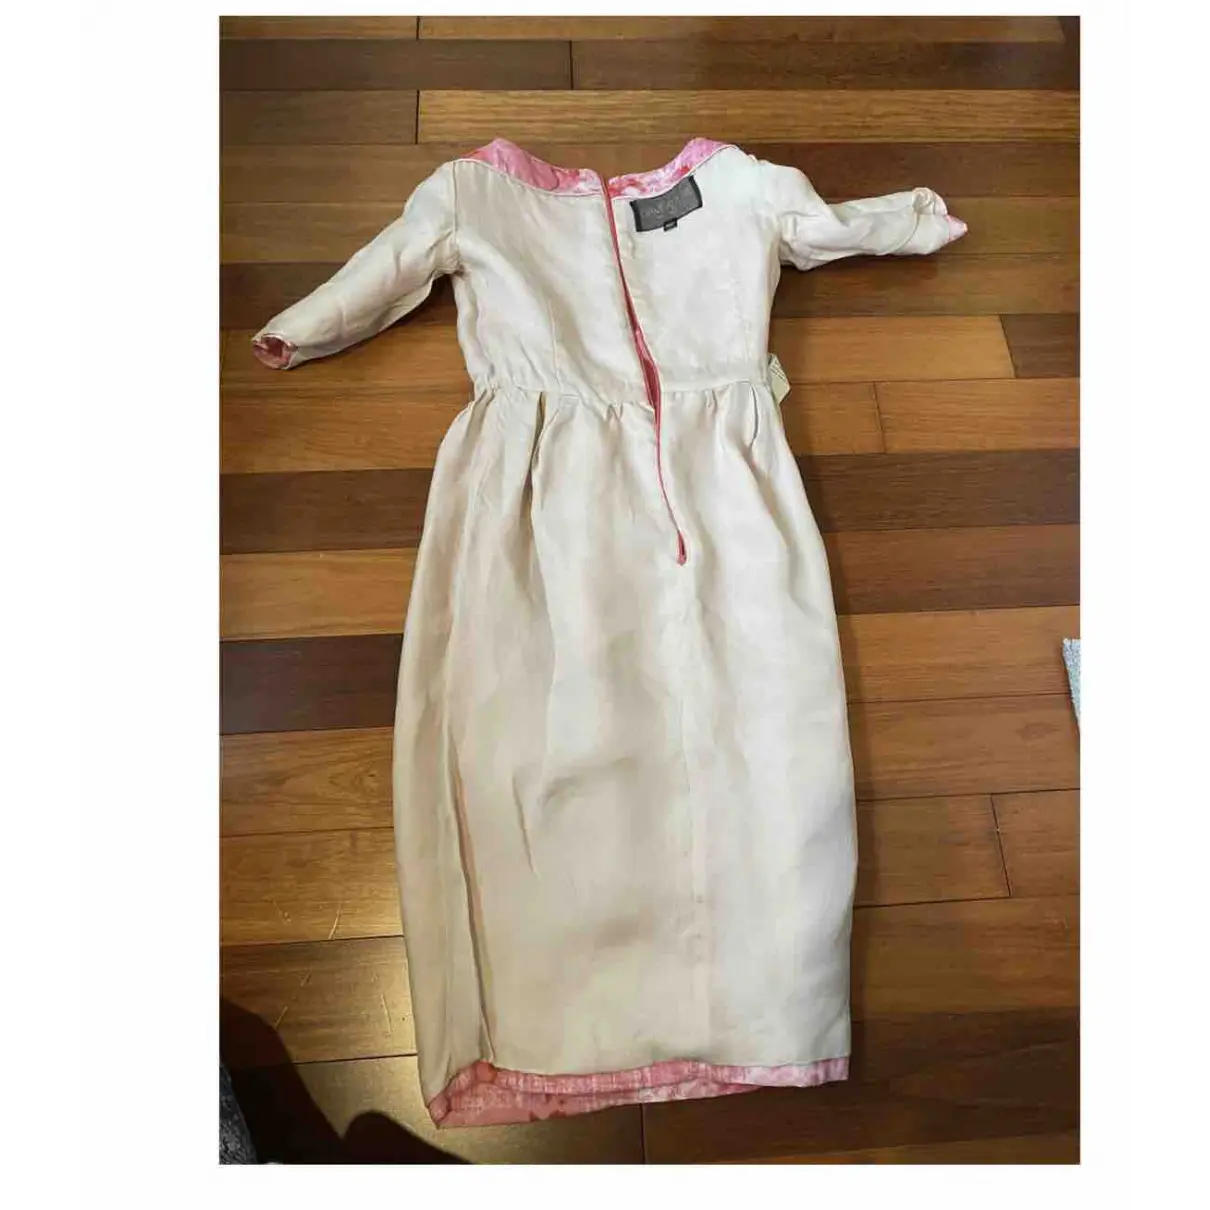 Buy Giambattista Valli Silk mid-length dress online